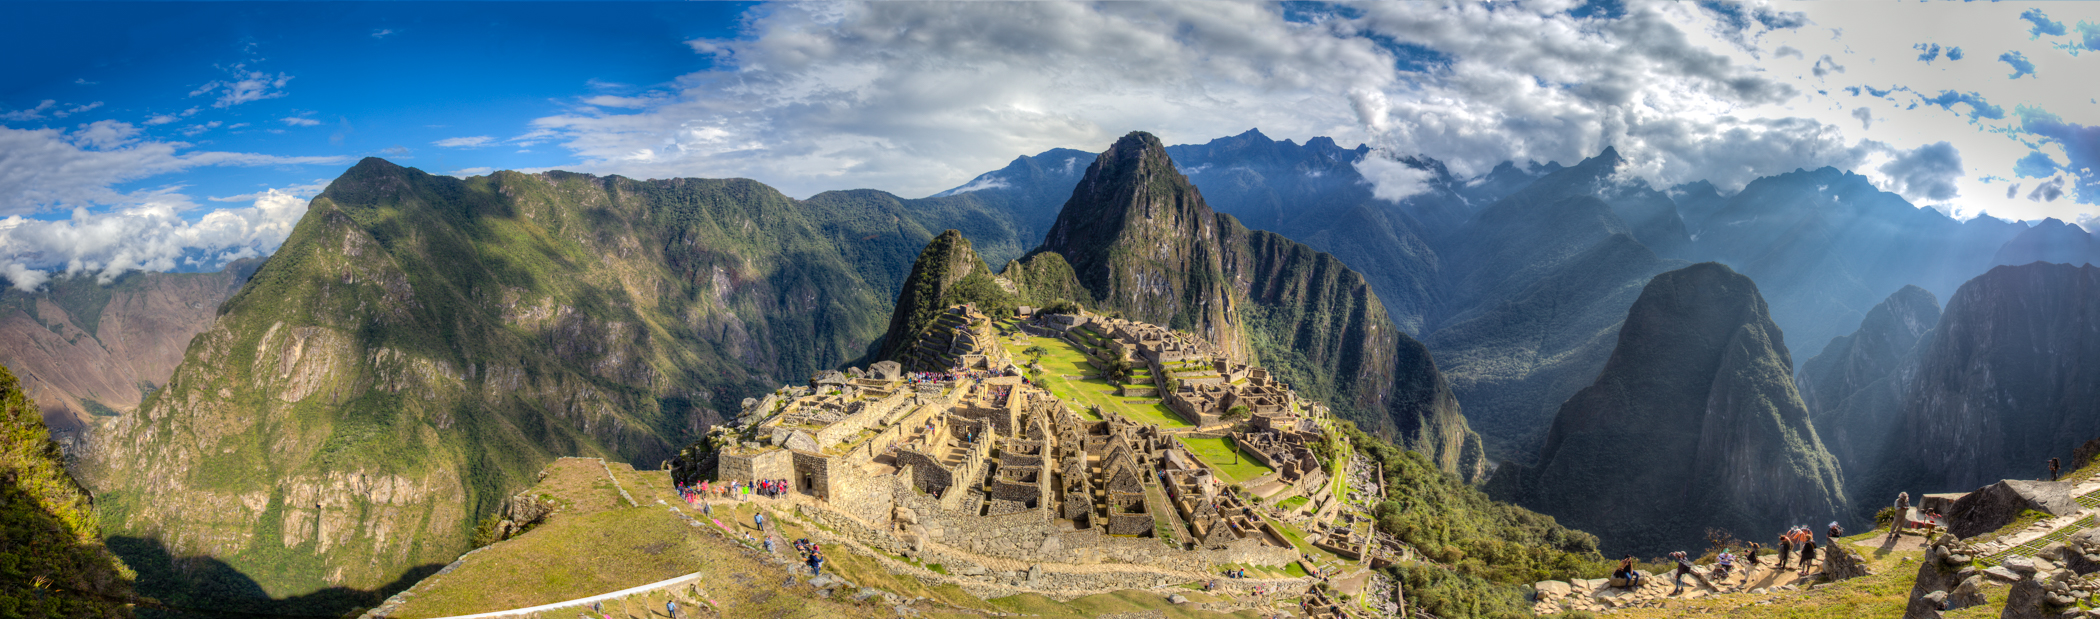 La potente visione di Machu Picchu...